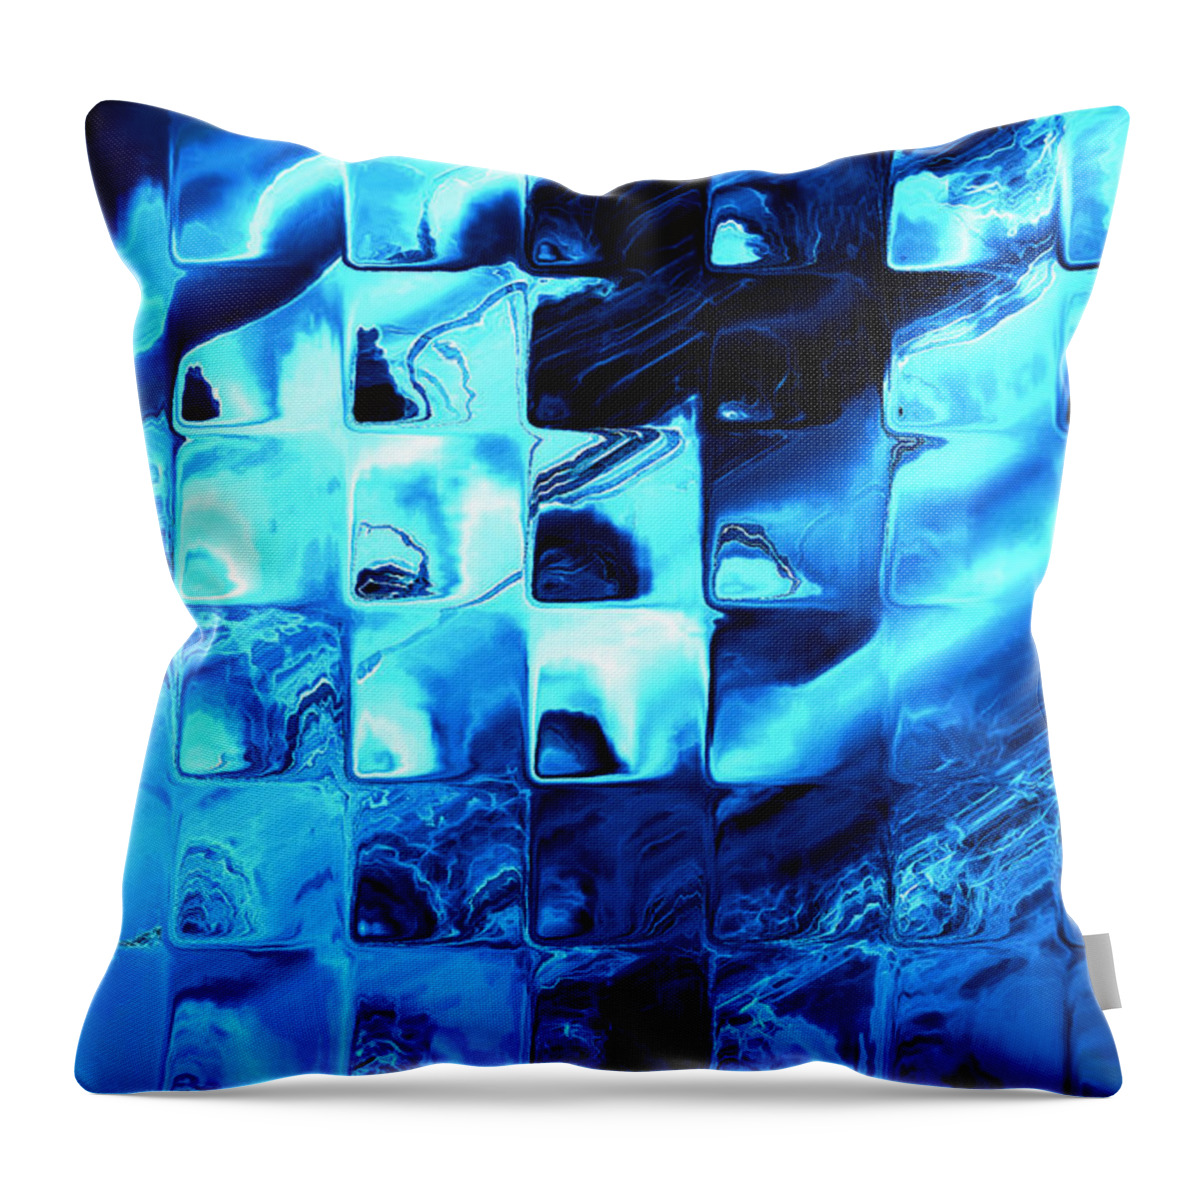 Art Throw Pillow featuring the digital art Eloquent by Jeff Iverson